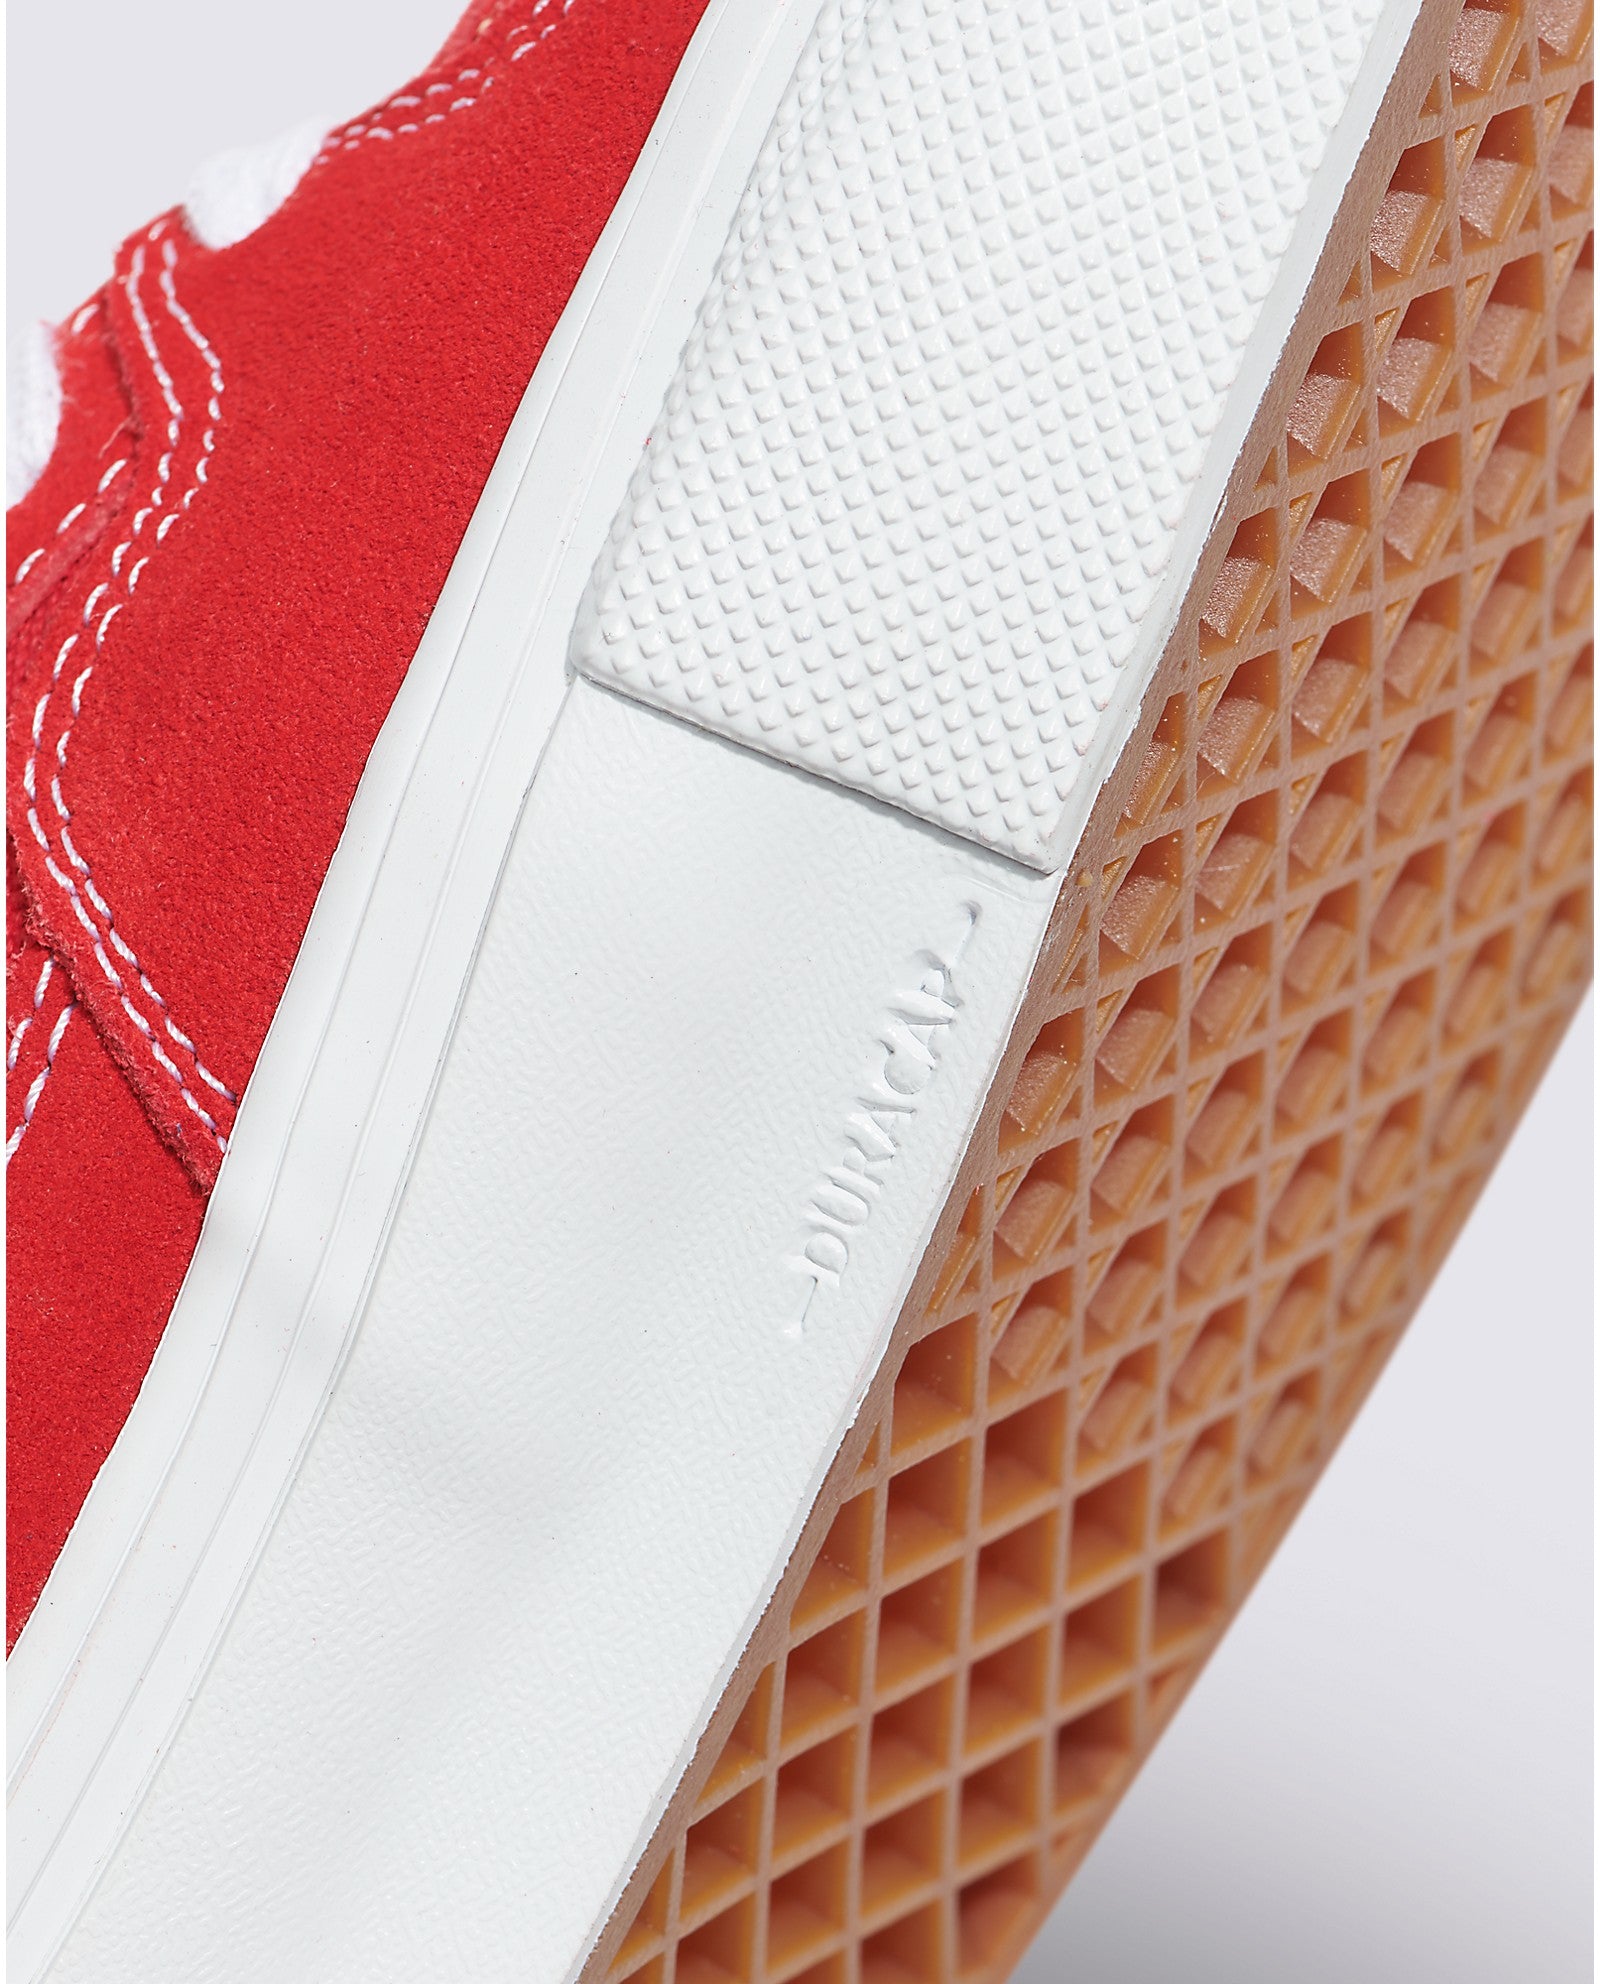 Red/White Skate Half Cab Vans Skate Shoe Detail